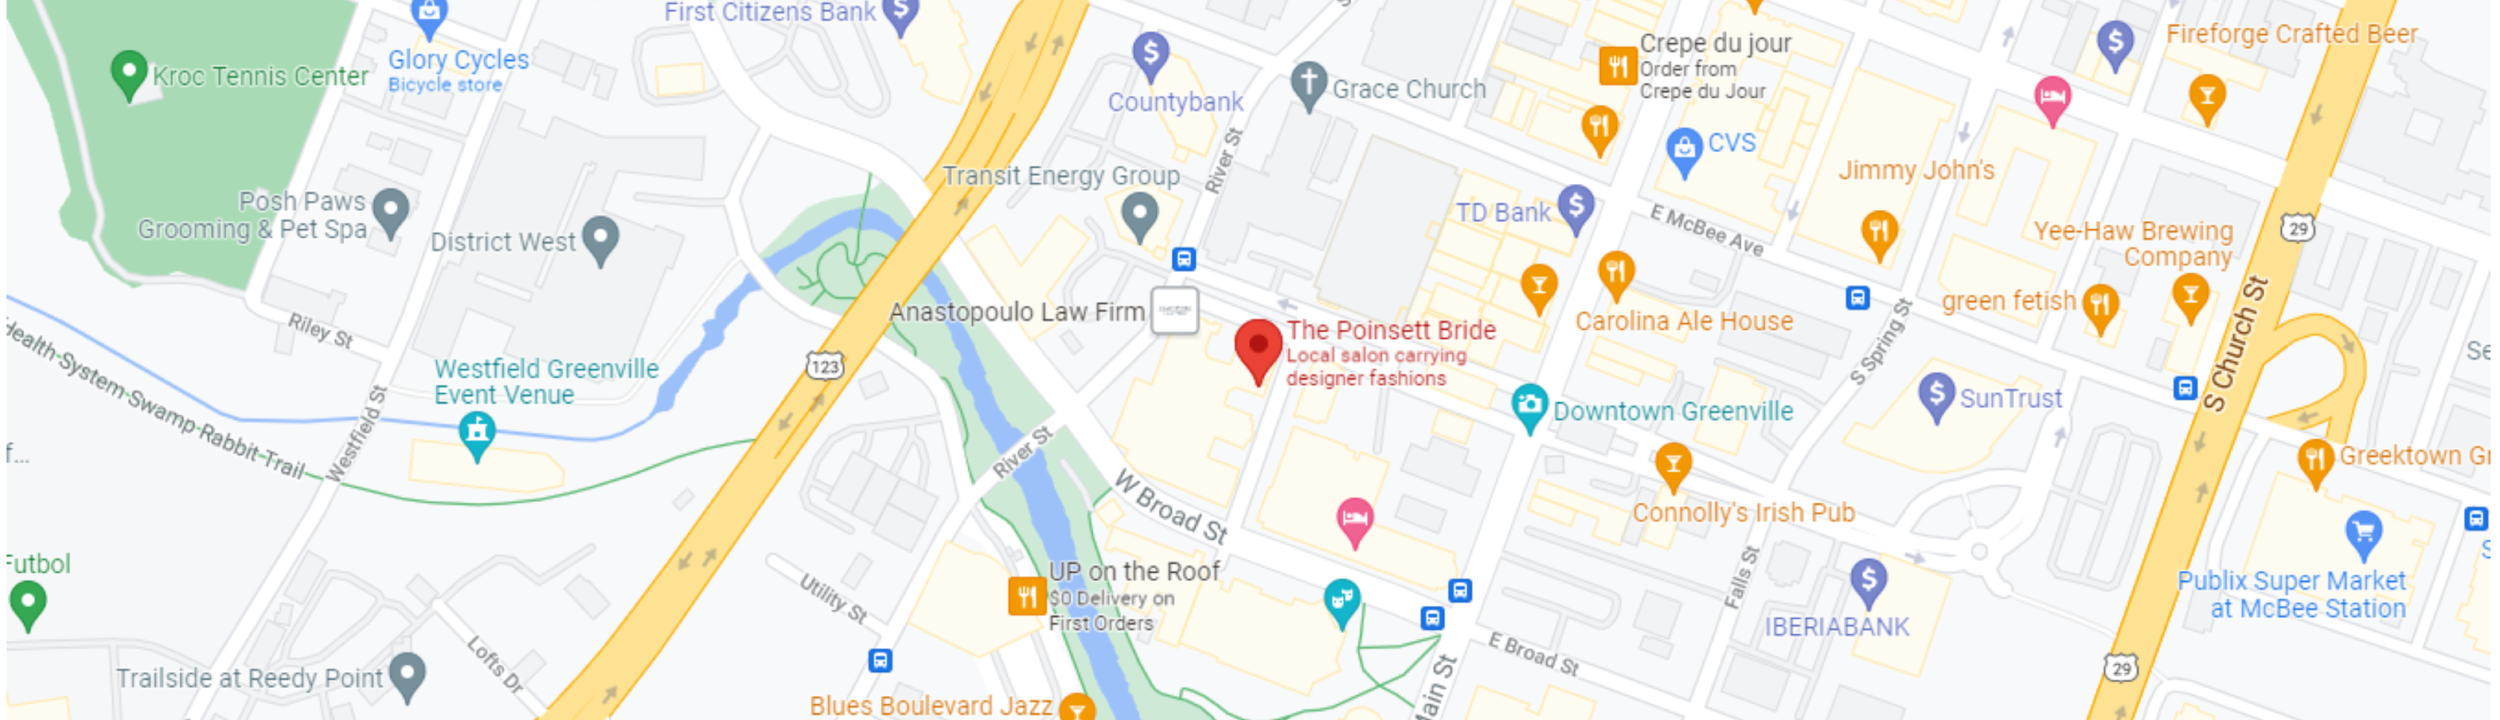 The Poinsett Bride location